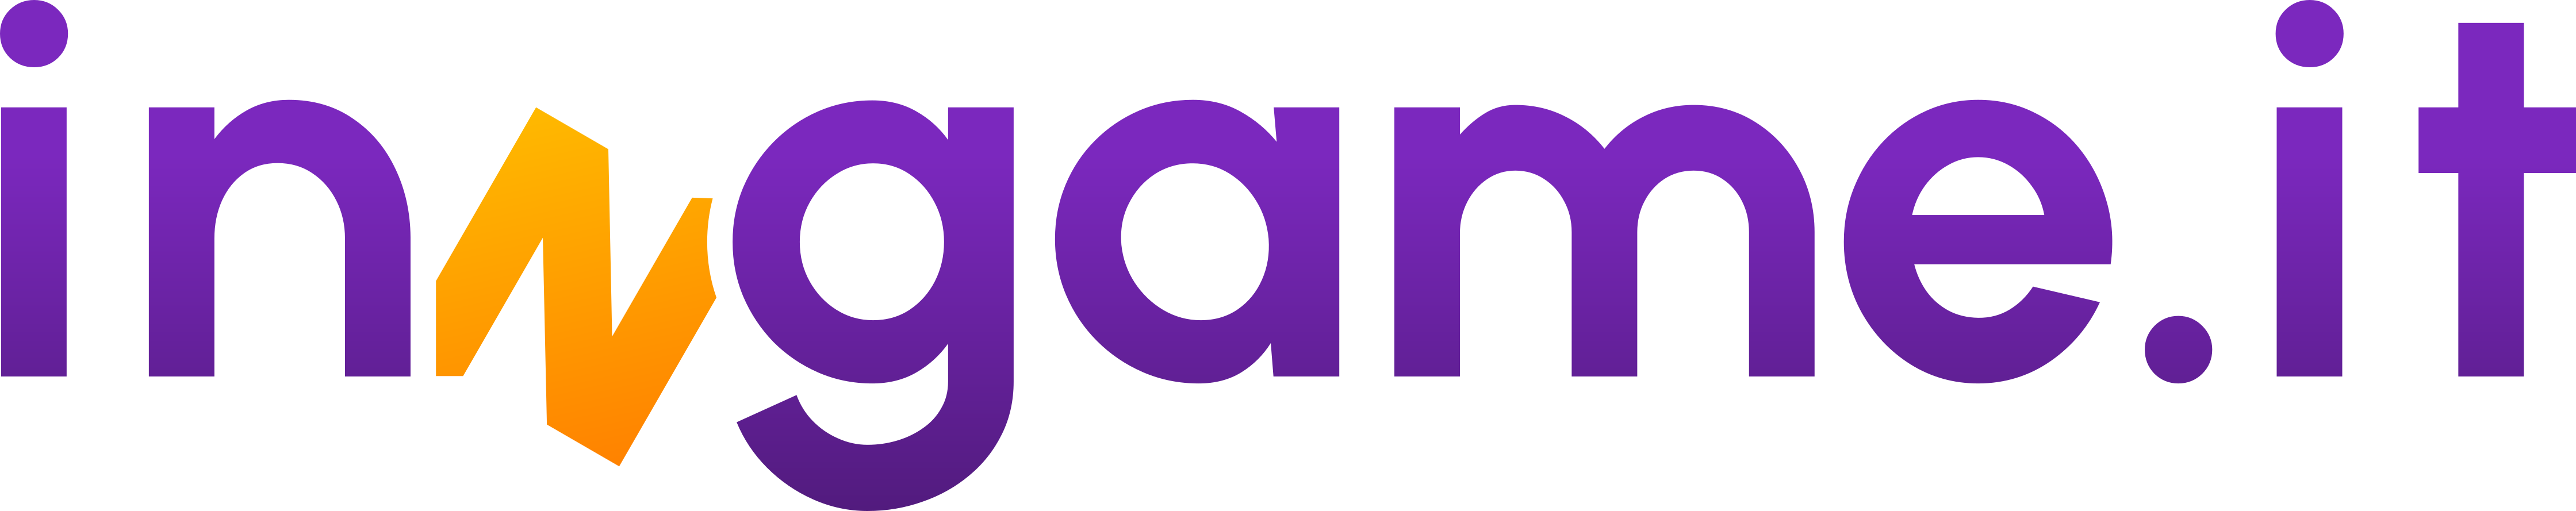 logo 1 1